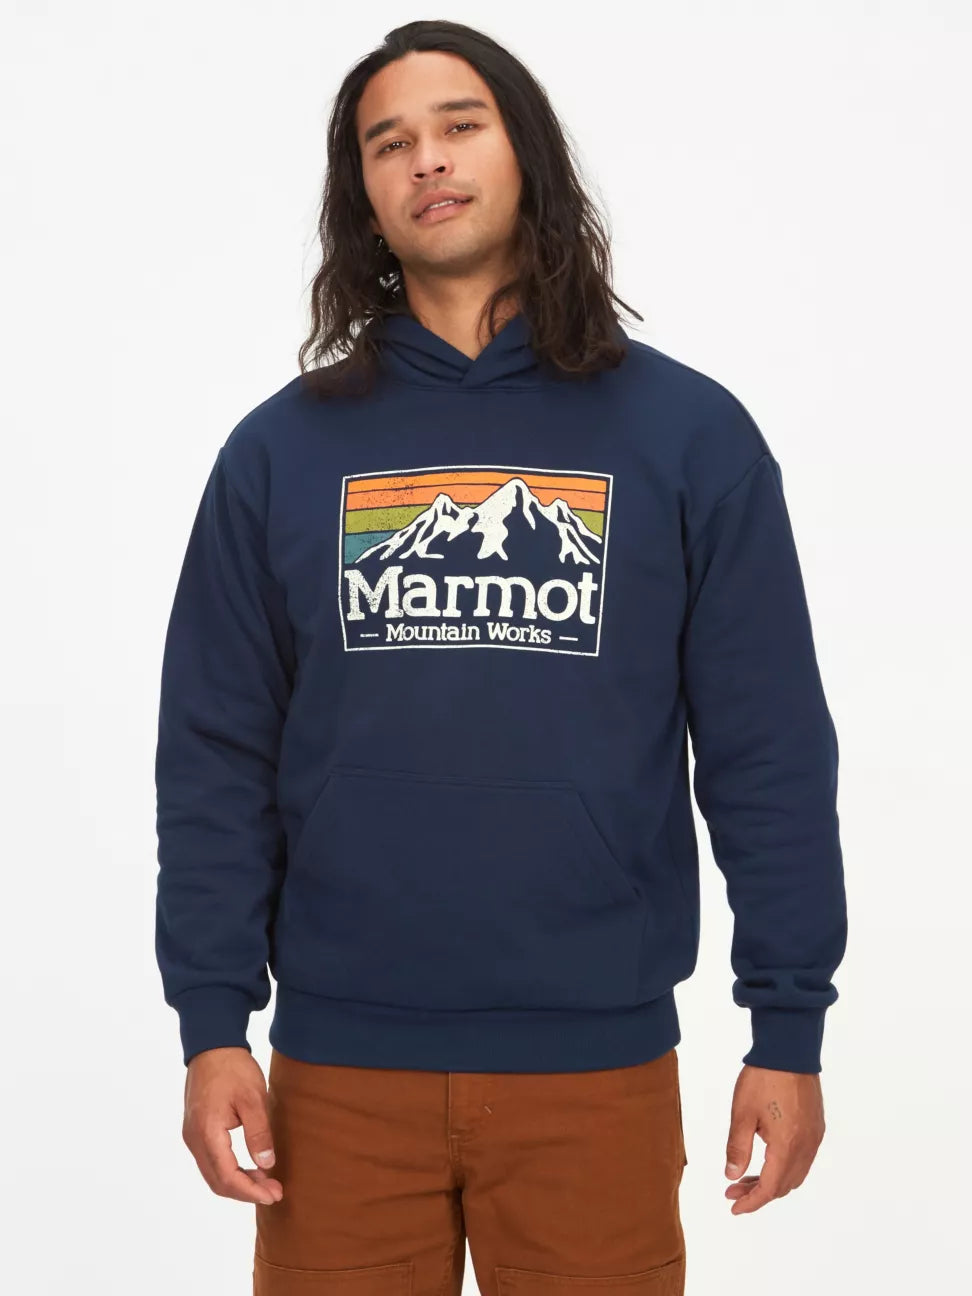 Marmot - Men's Marmot Mountain Works Gradient Hoody